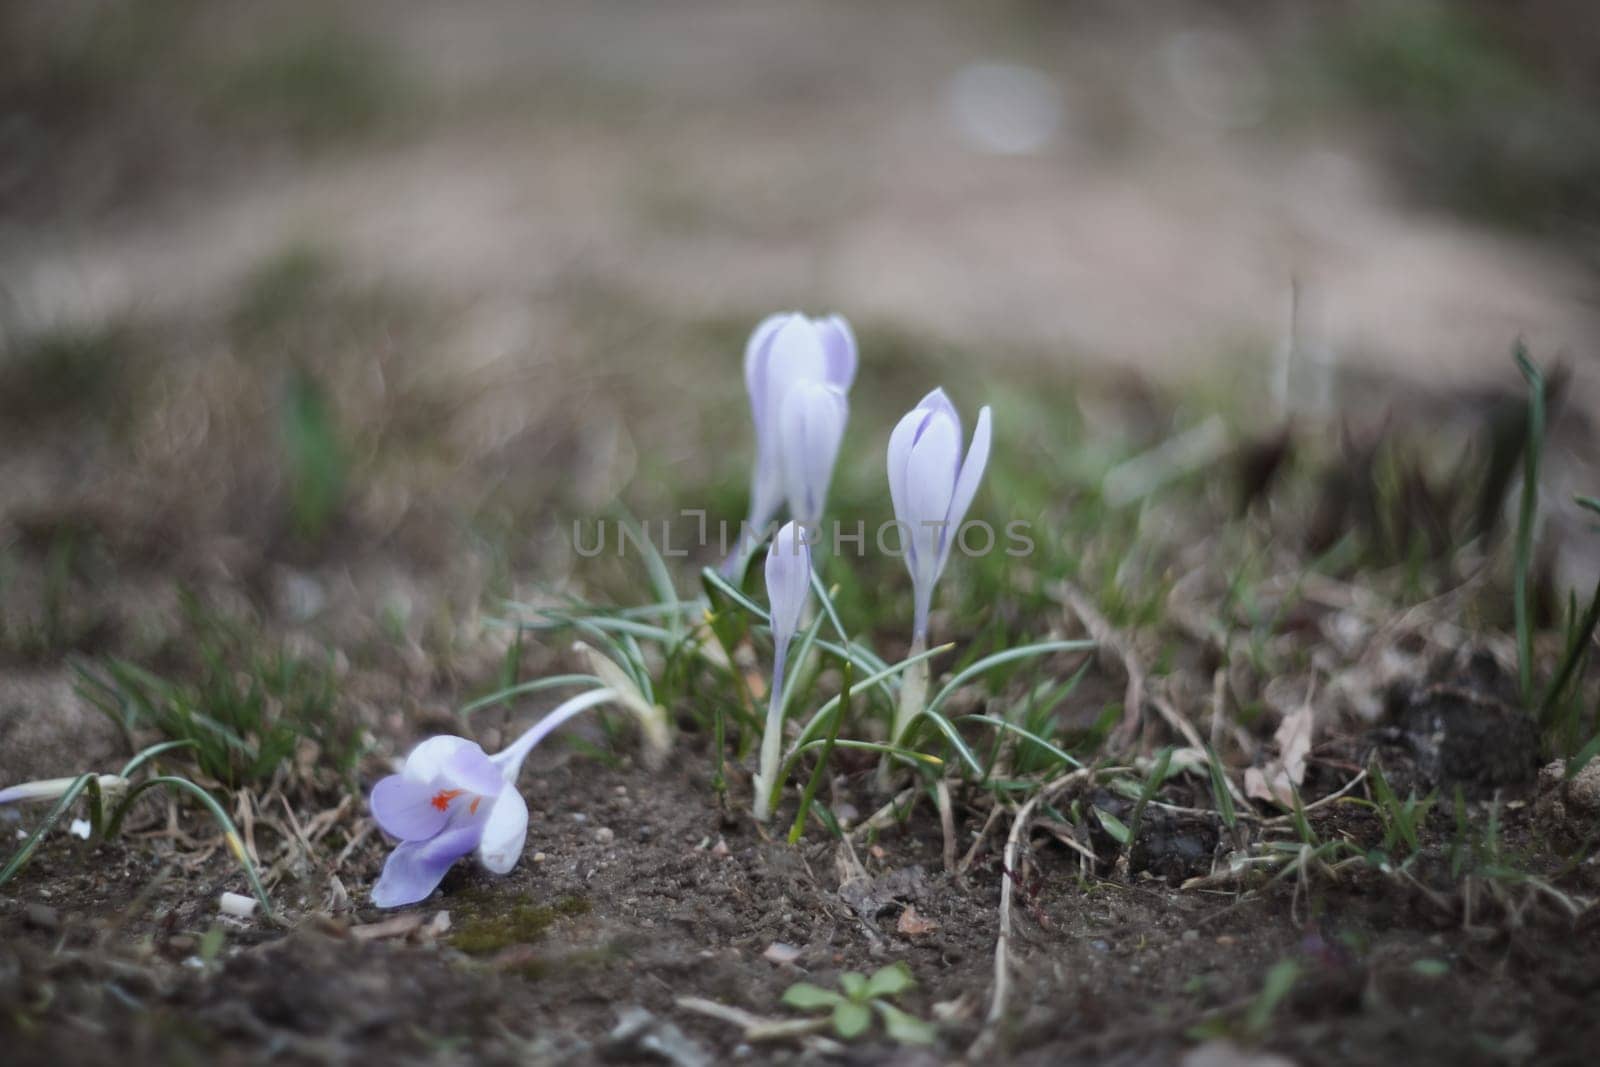 Spring background with flowering violet crocuses flowers in early spring.